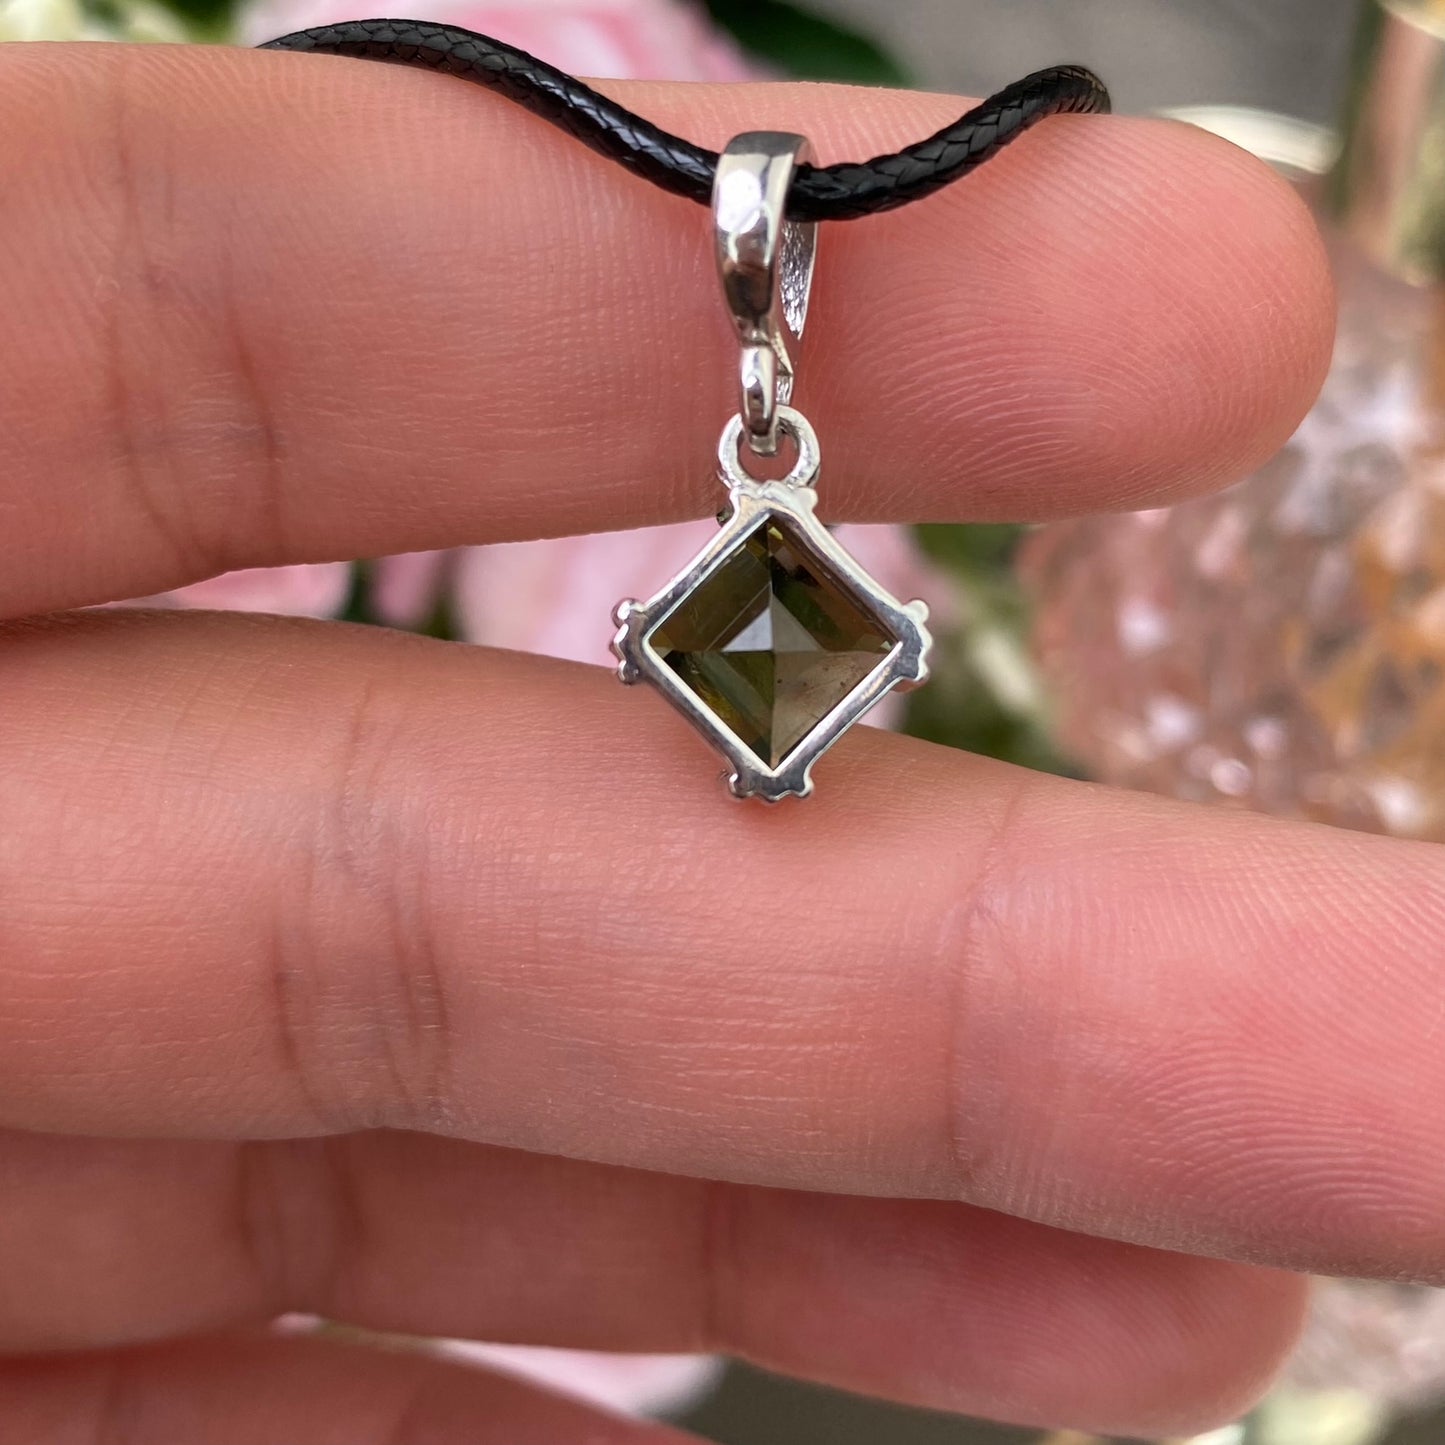 Moldavite pendant (Czech Republic)